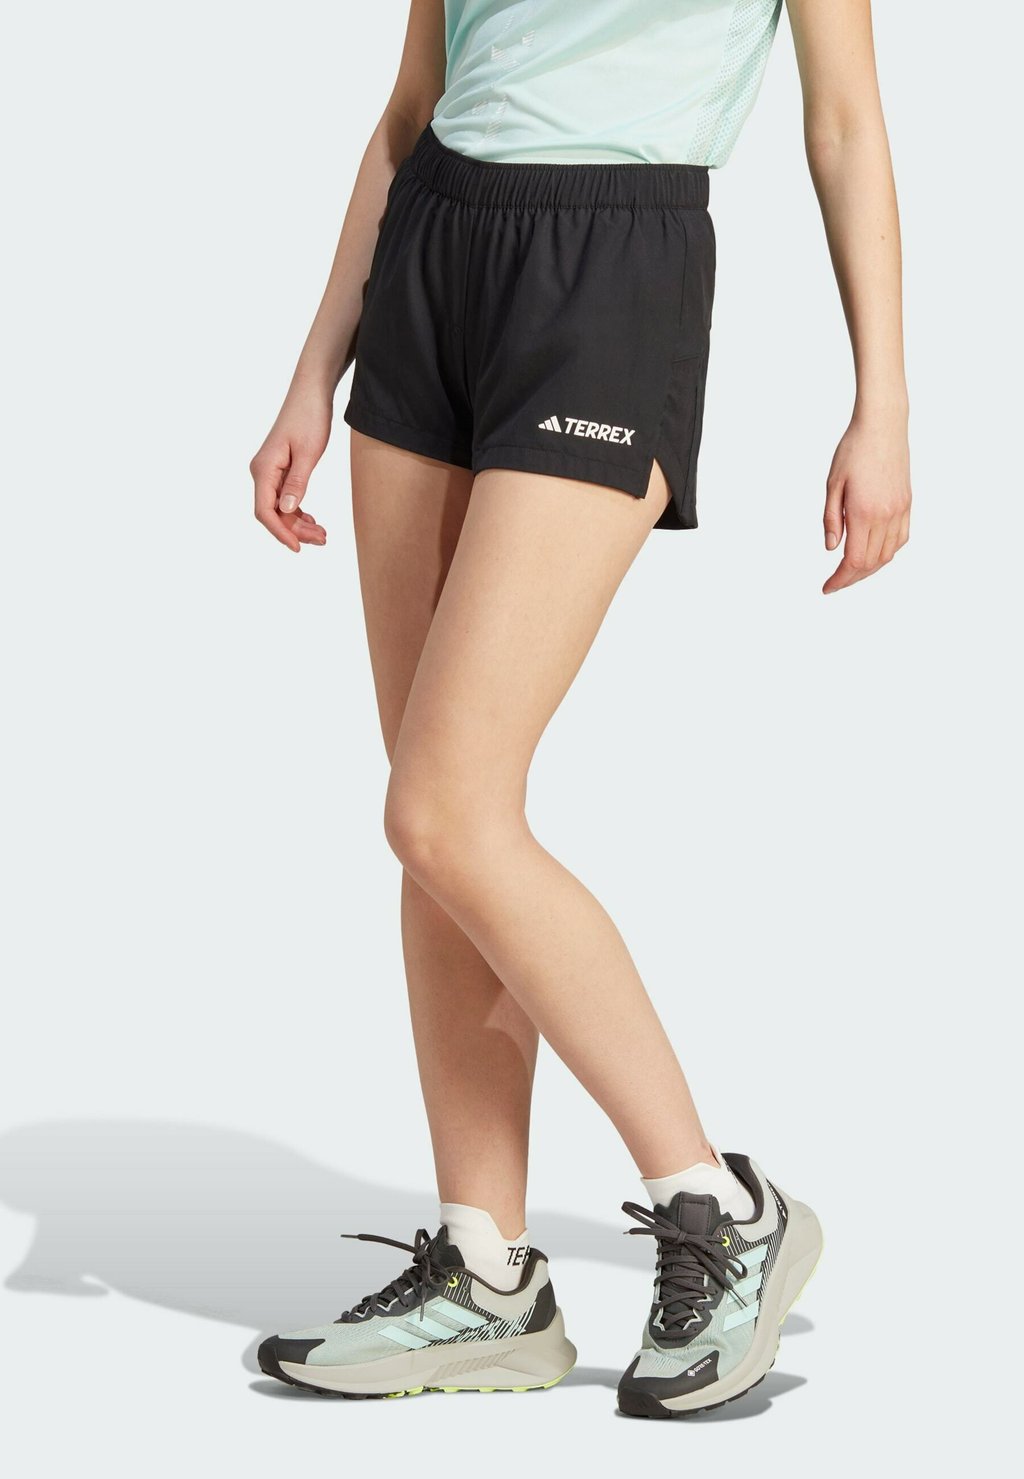 спортивные шорты lined running trail nike цвет black black Спортивные шорты TRAIL Adidas Terrex, цвет black